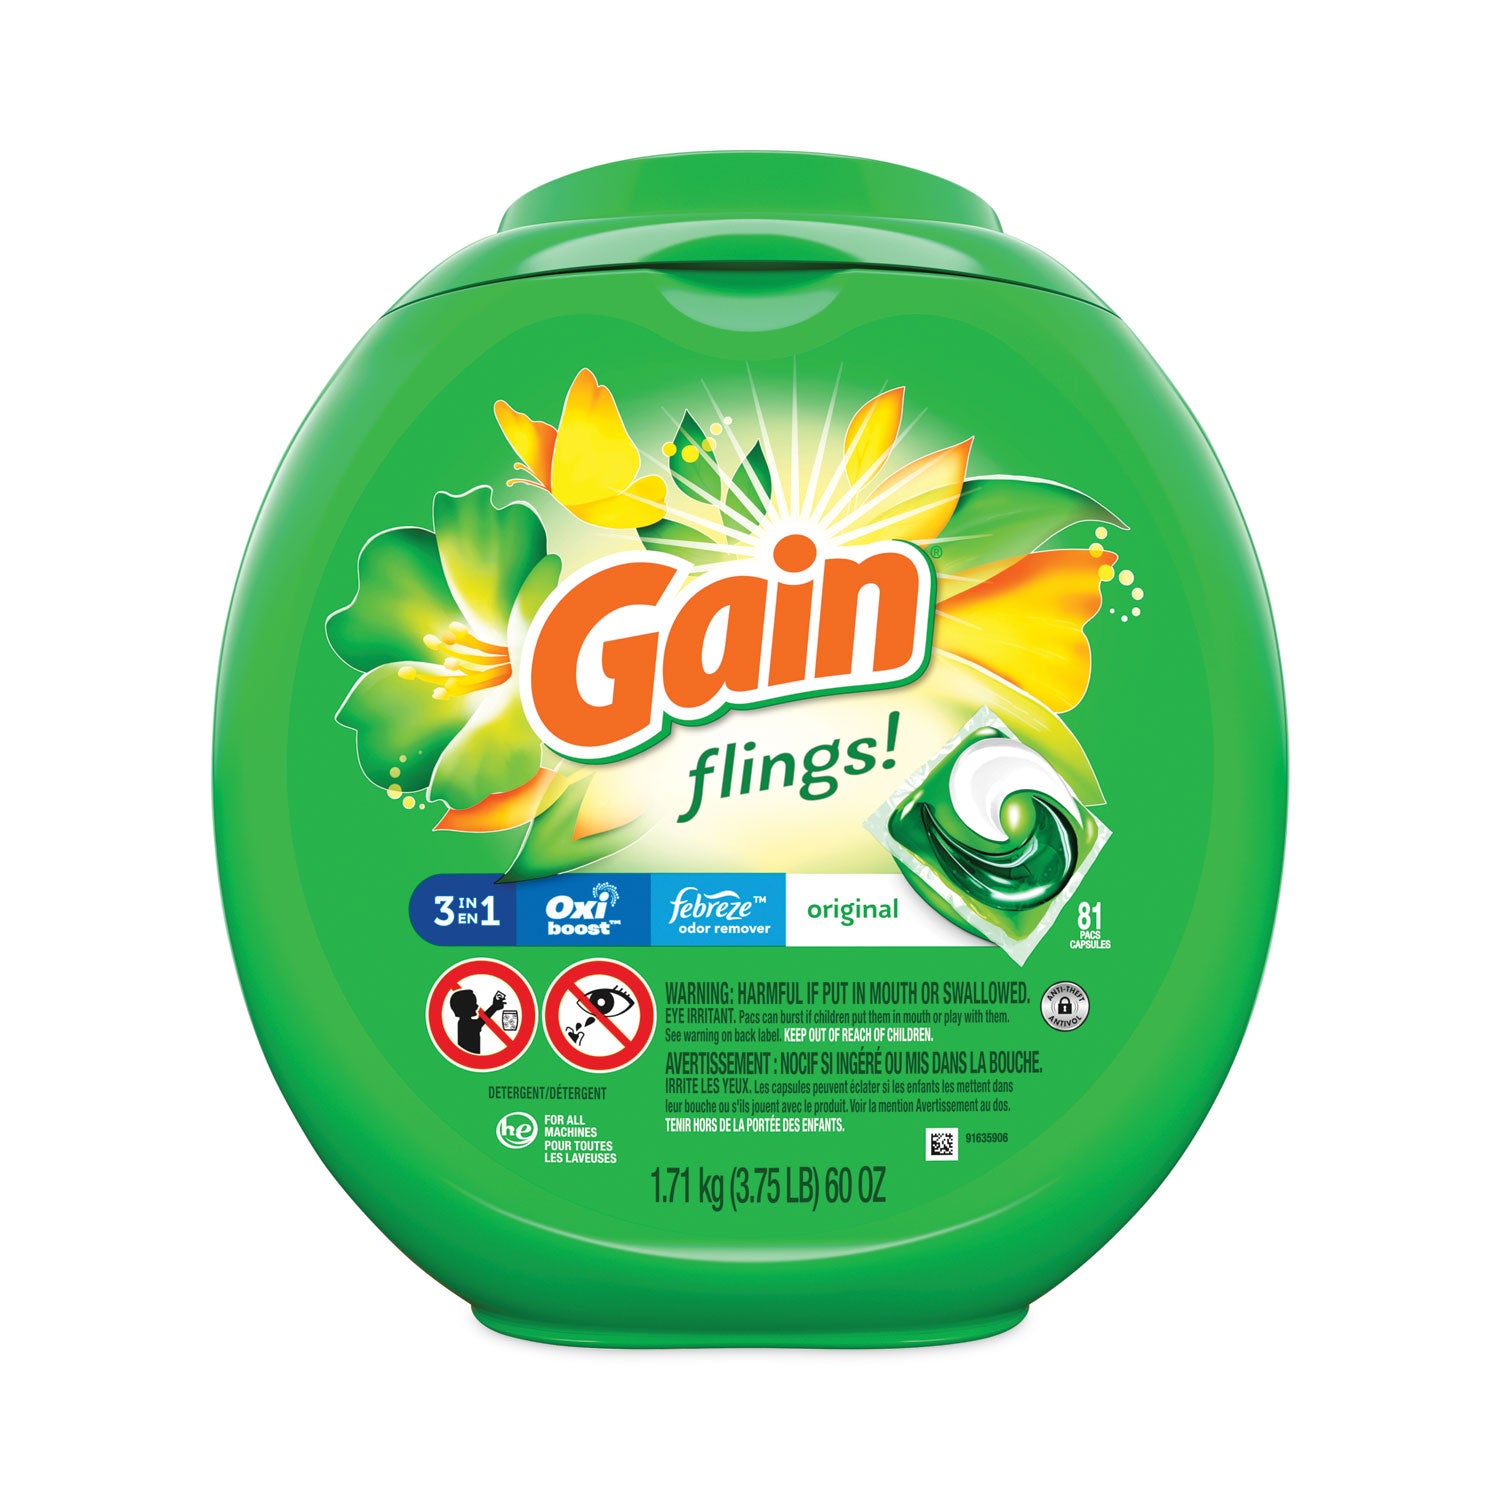 flings-detergent-pods-orginal-81-pods-tub_pgc91792ea - 1